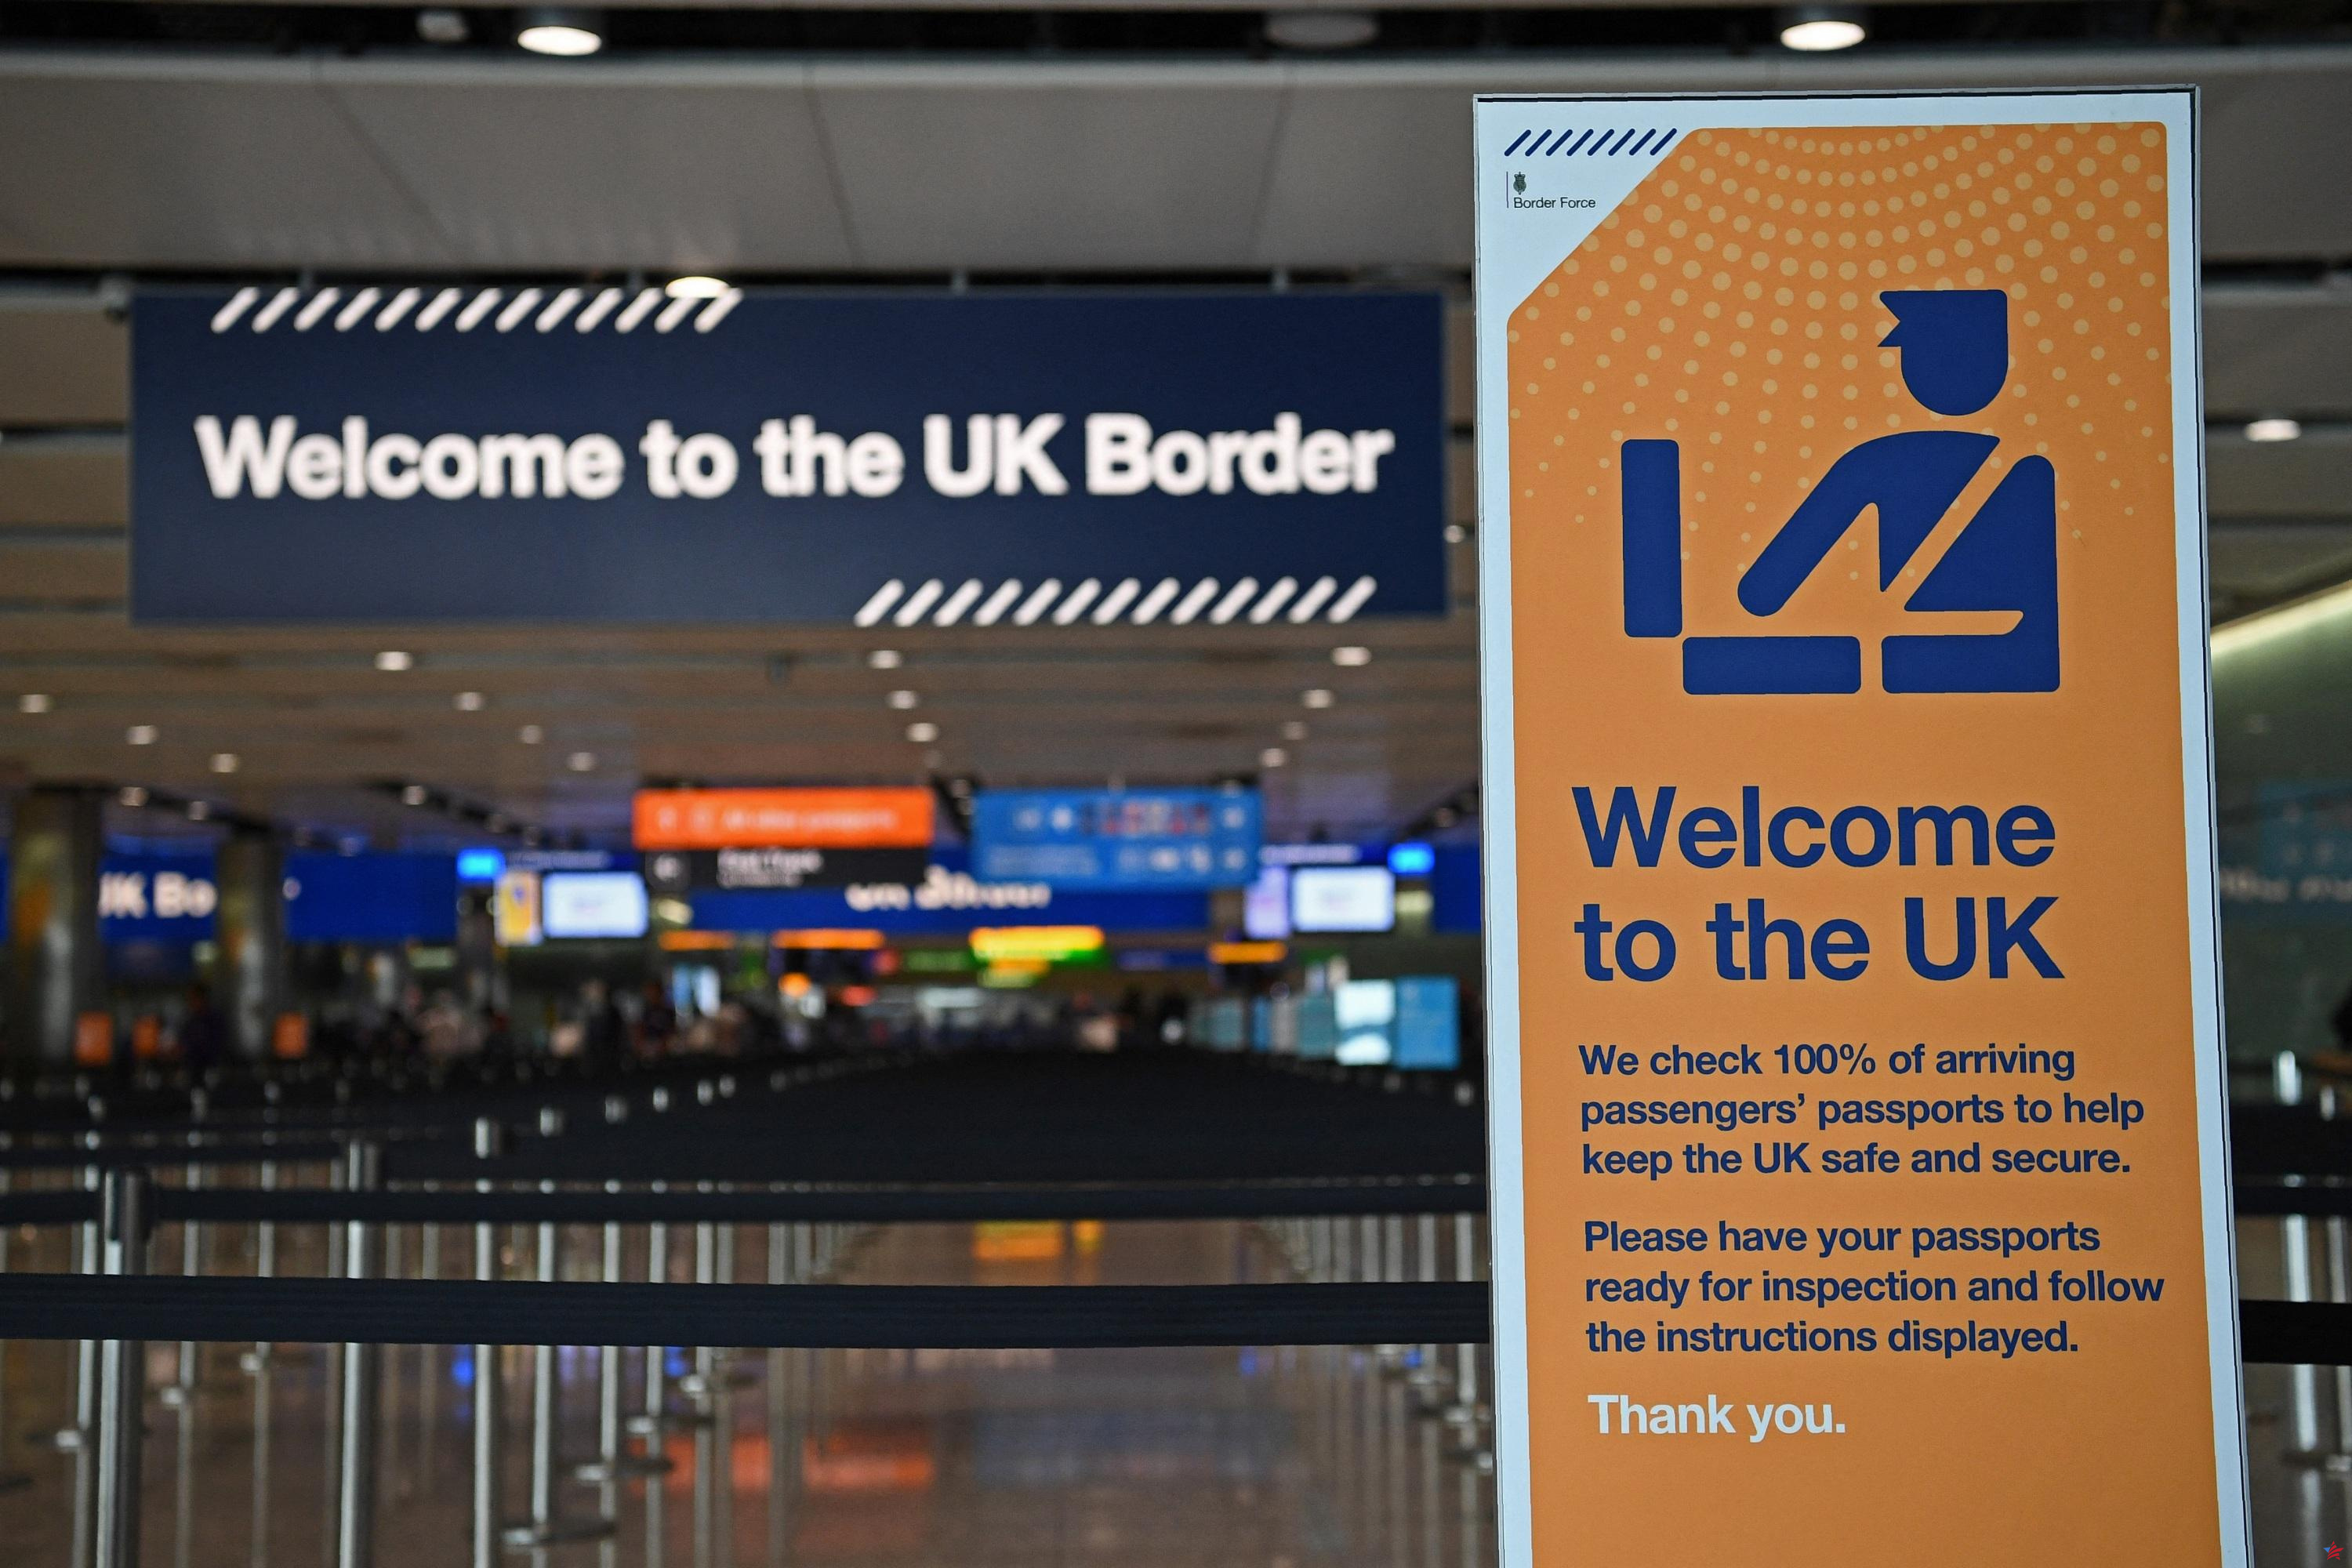 ¿Pronto podremos viajar al Reino Unido sin pasaporte?